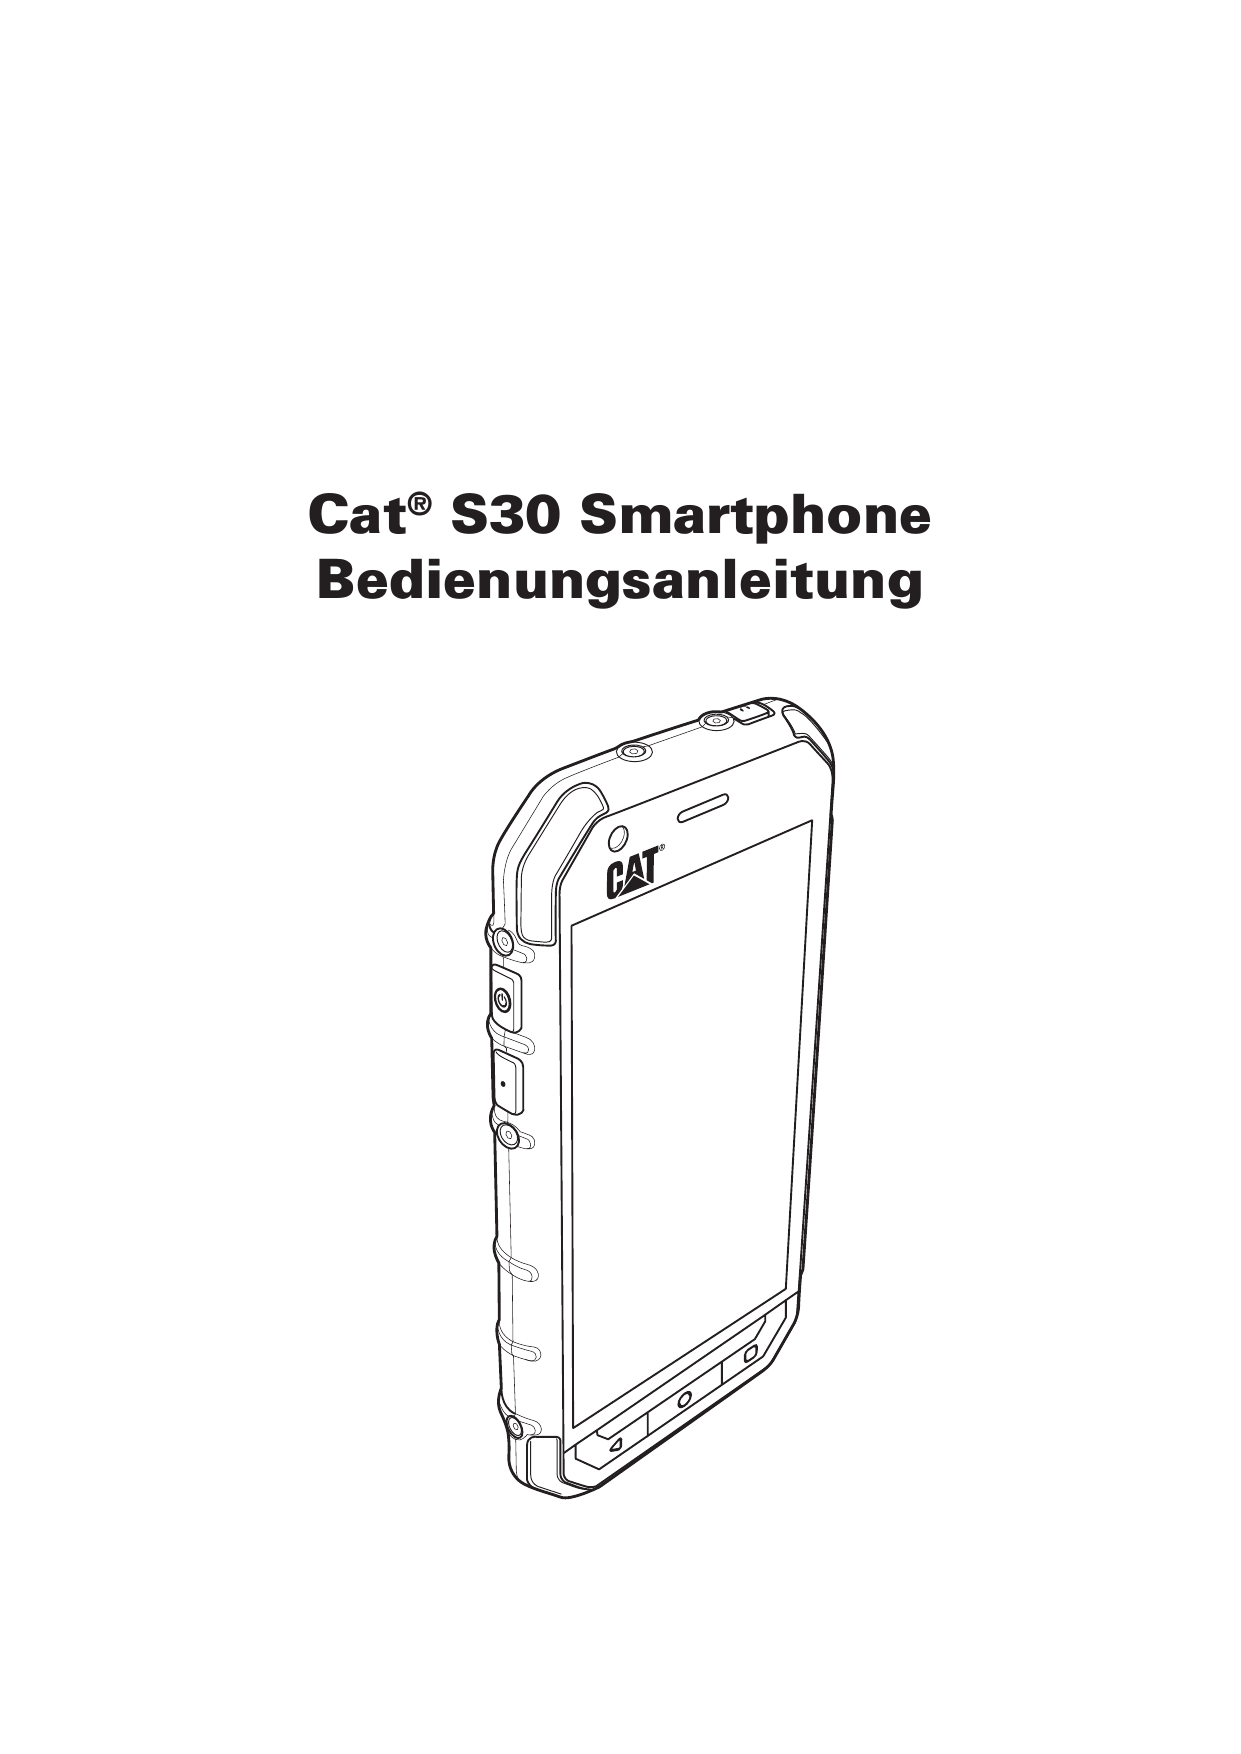 Cat® S30 SmartphoneBedienungsanleitung